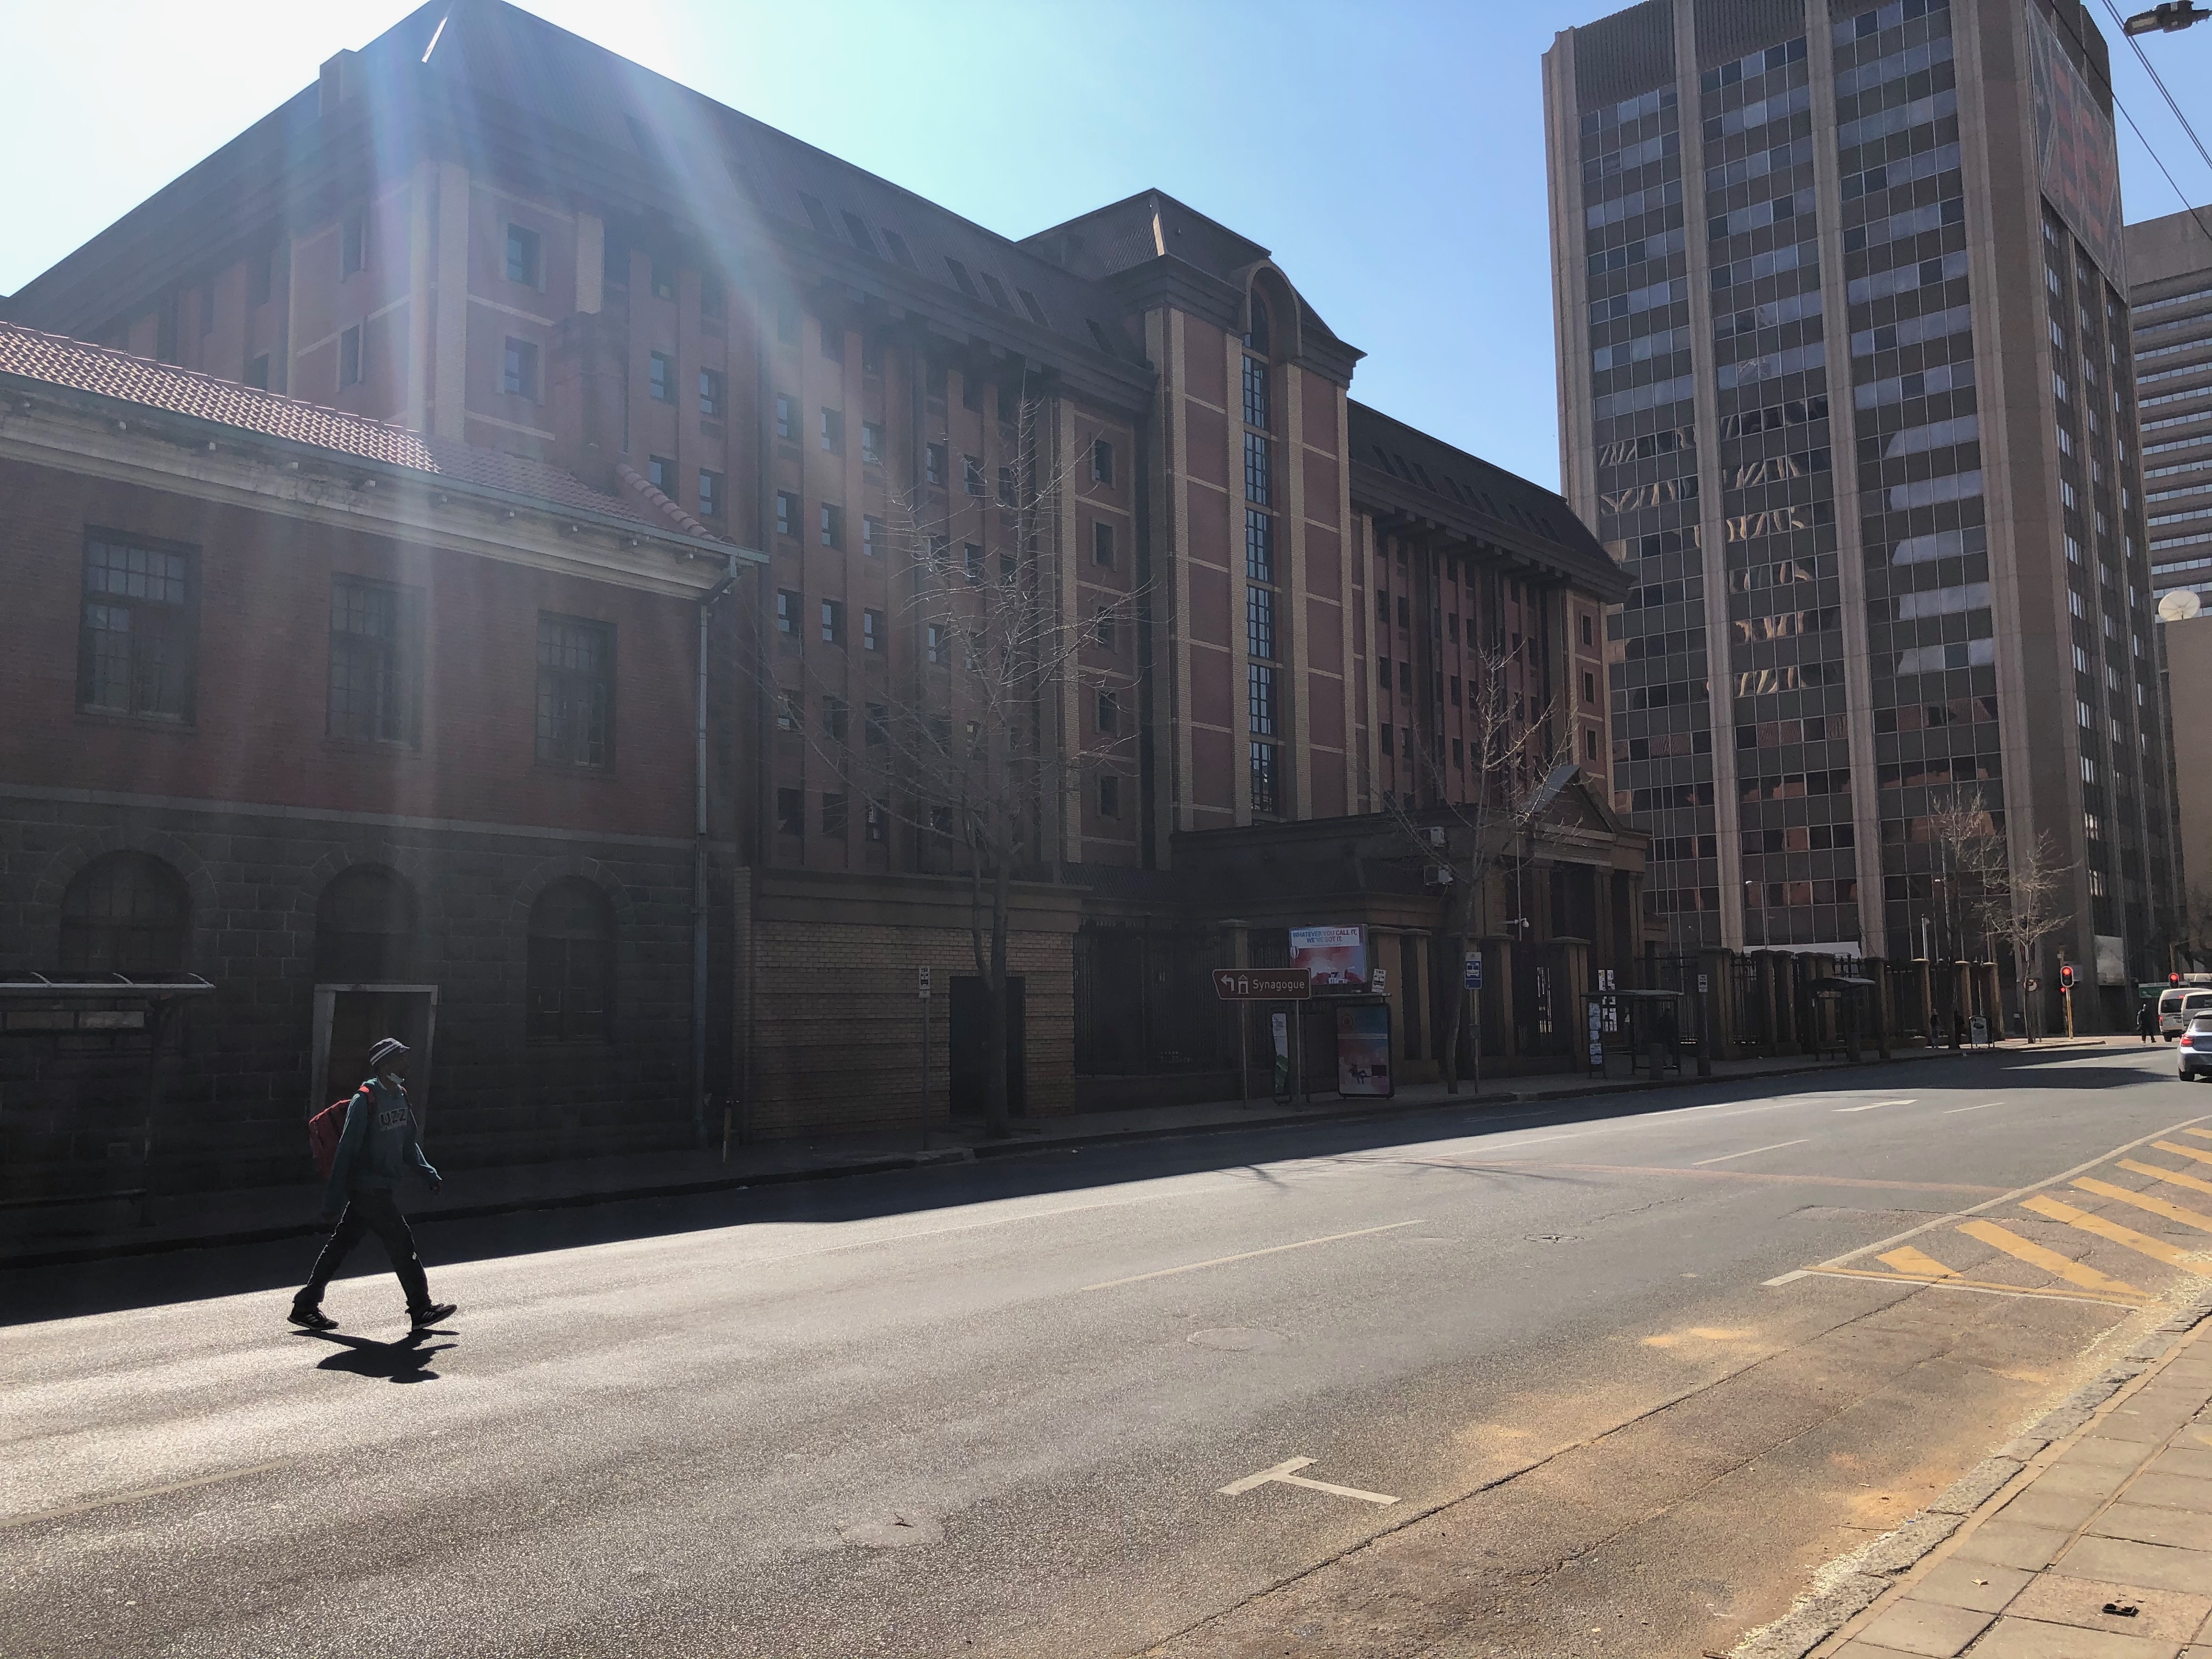 Gauteng High Court ringed with Orgonite